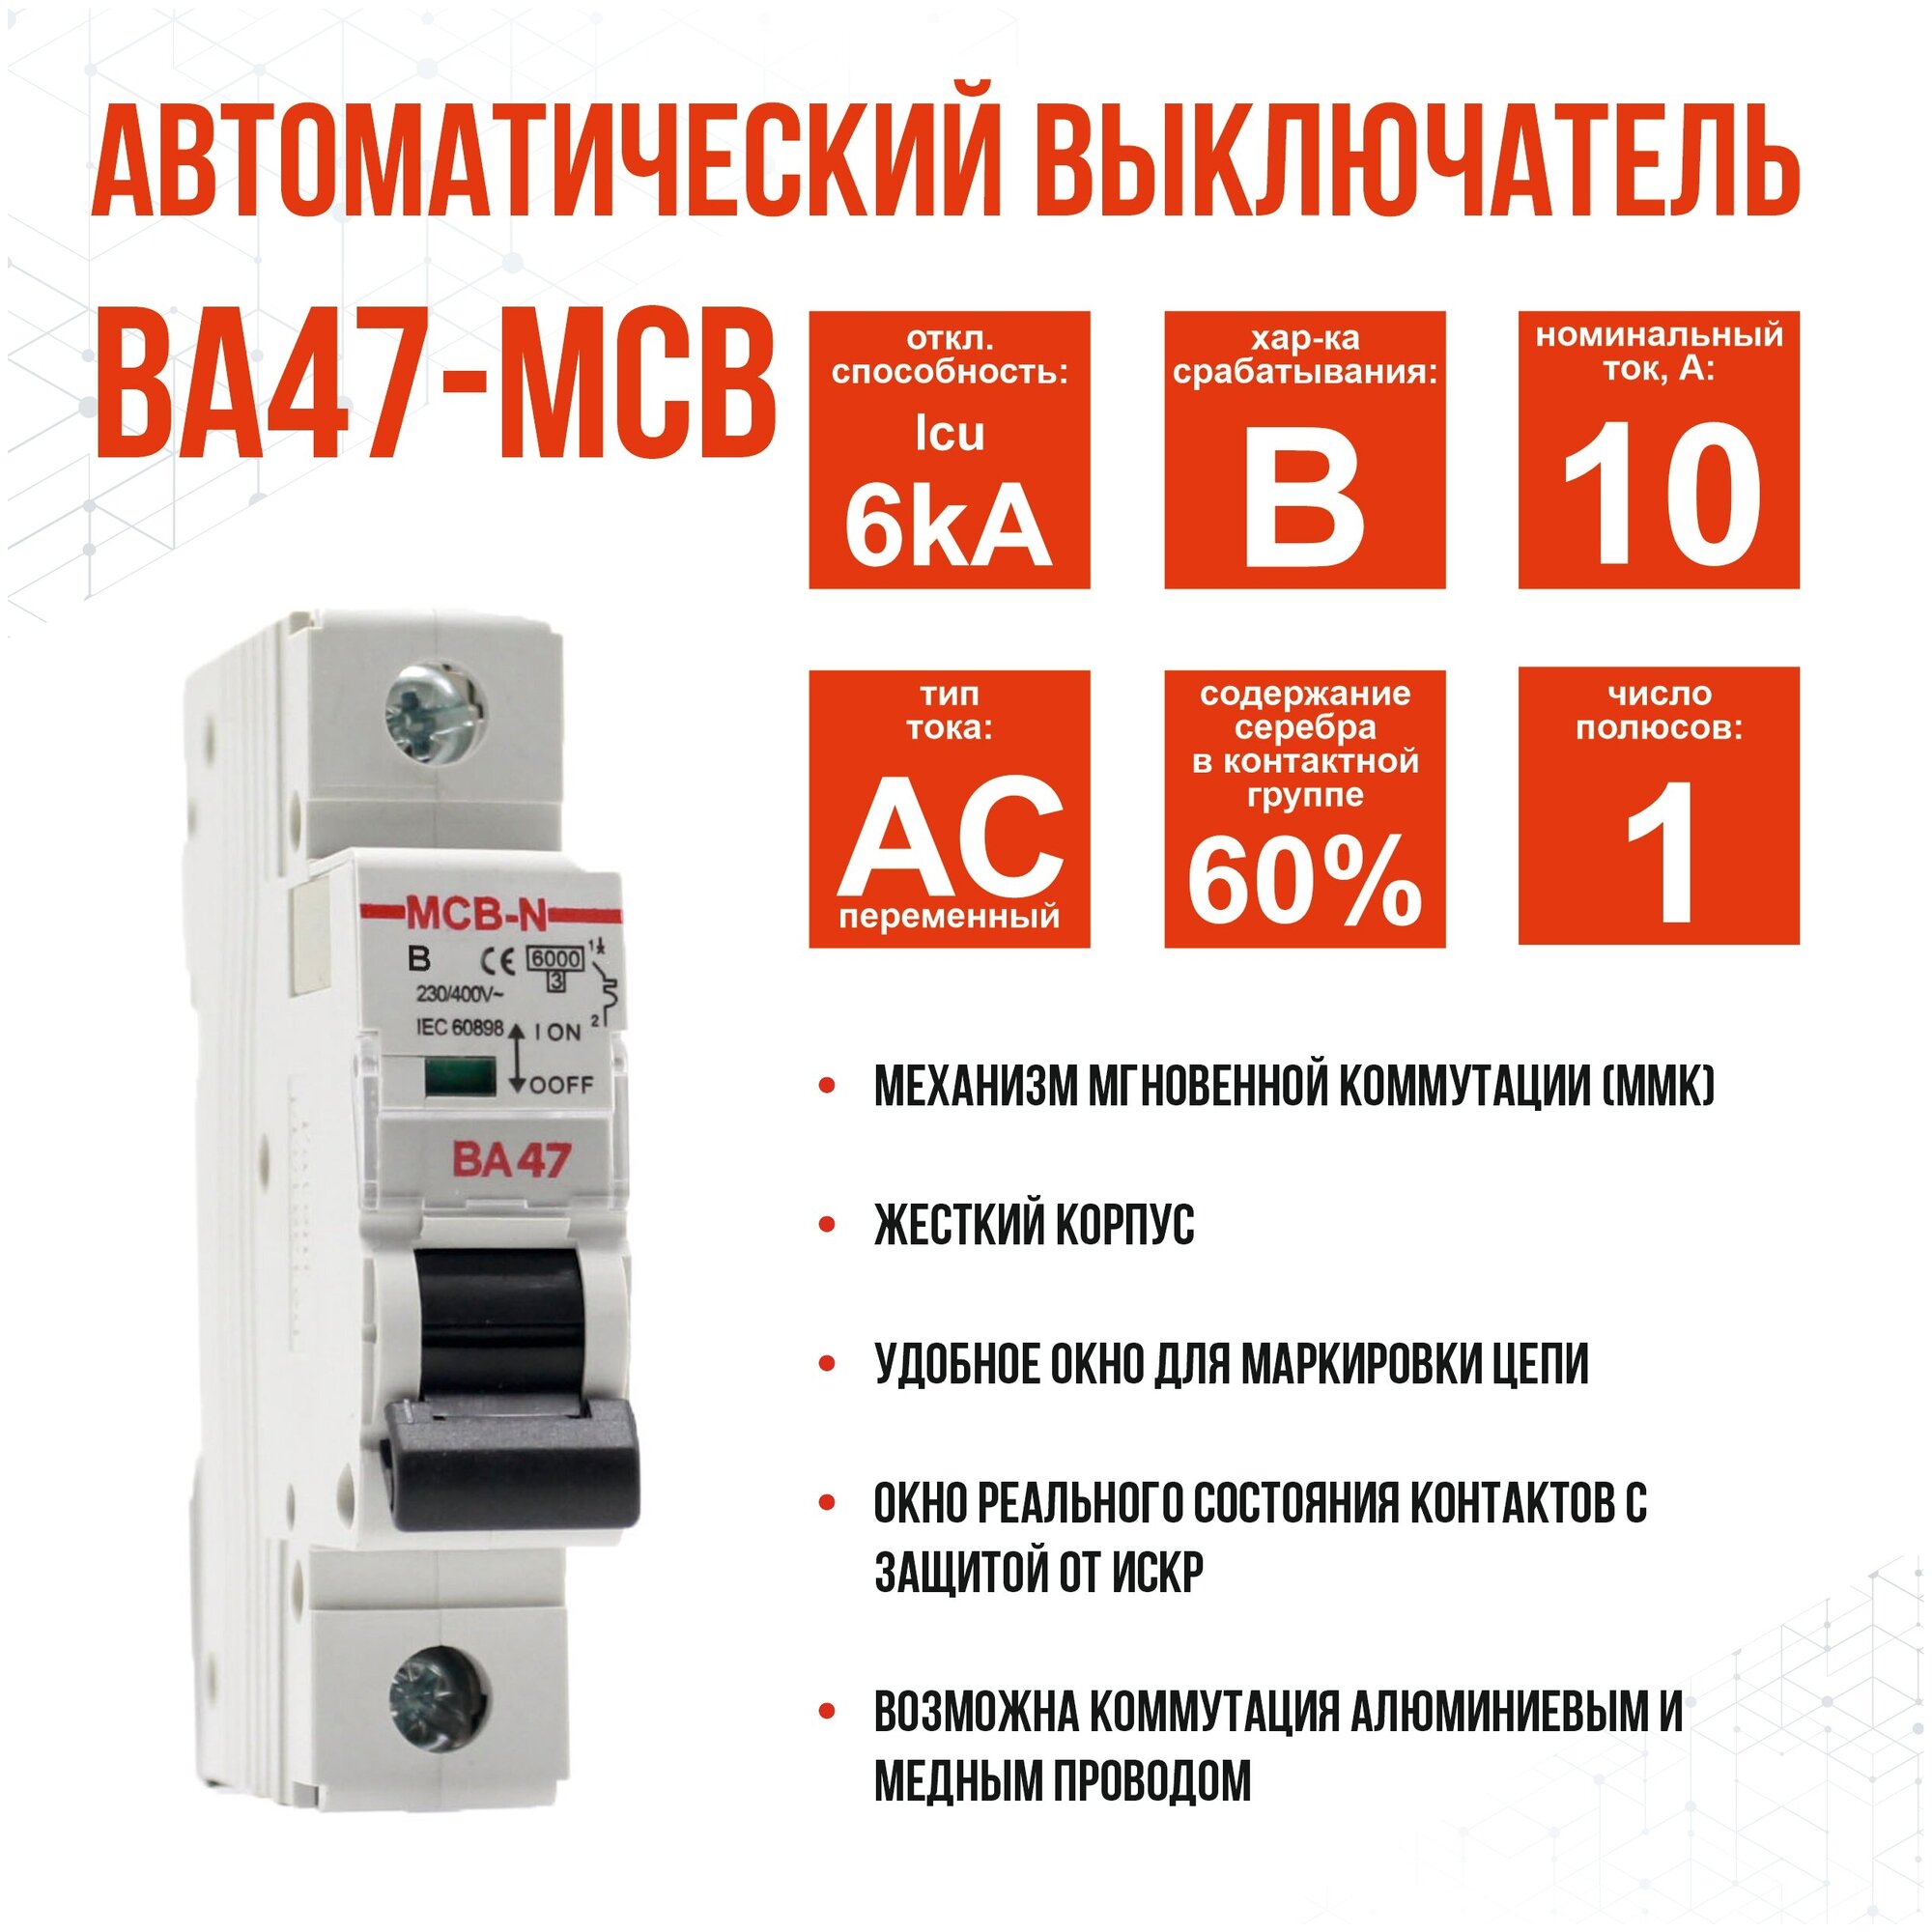 Выключатель автоматический AKEL ВА47-MCB-N-1P-B10-AC, 1 шт.